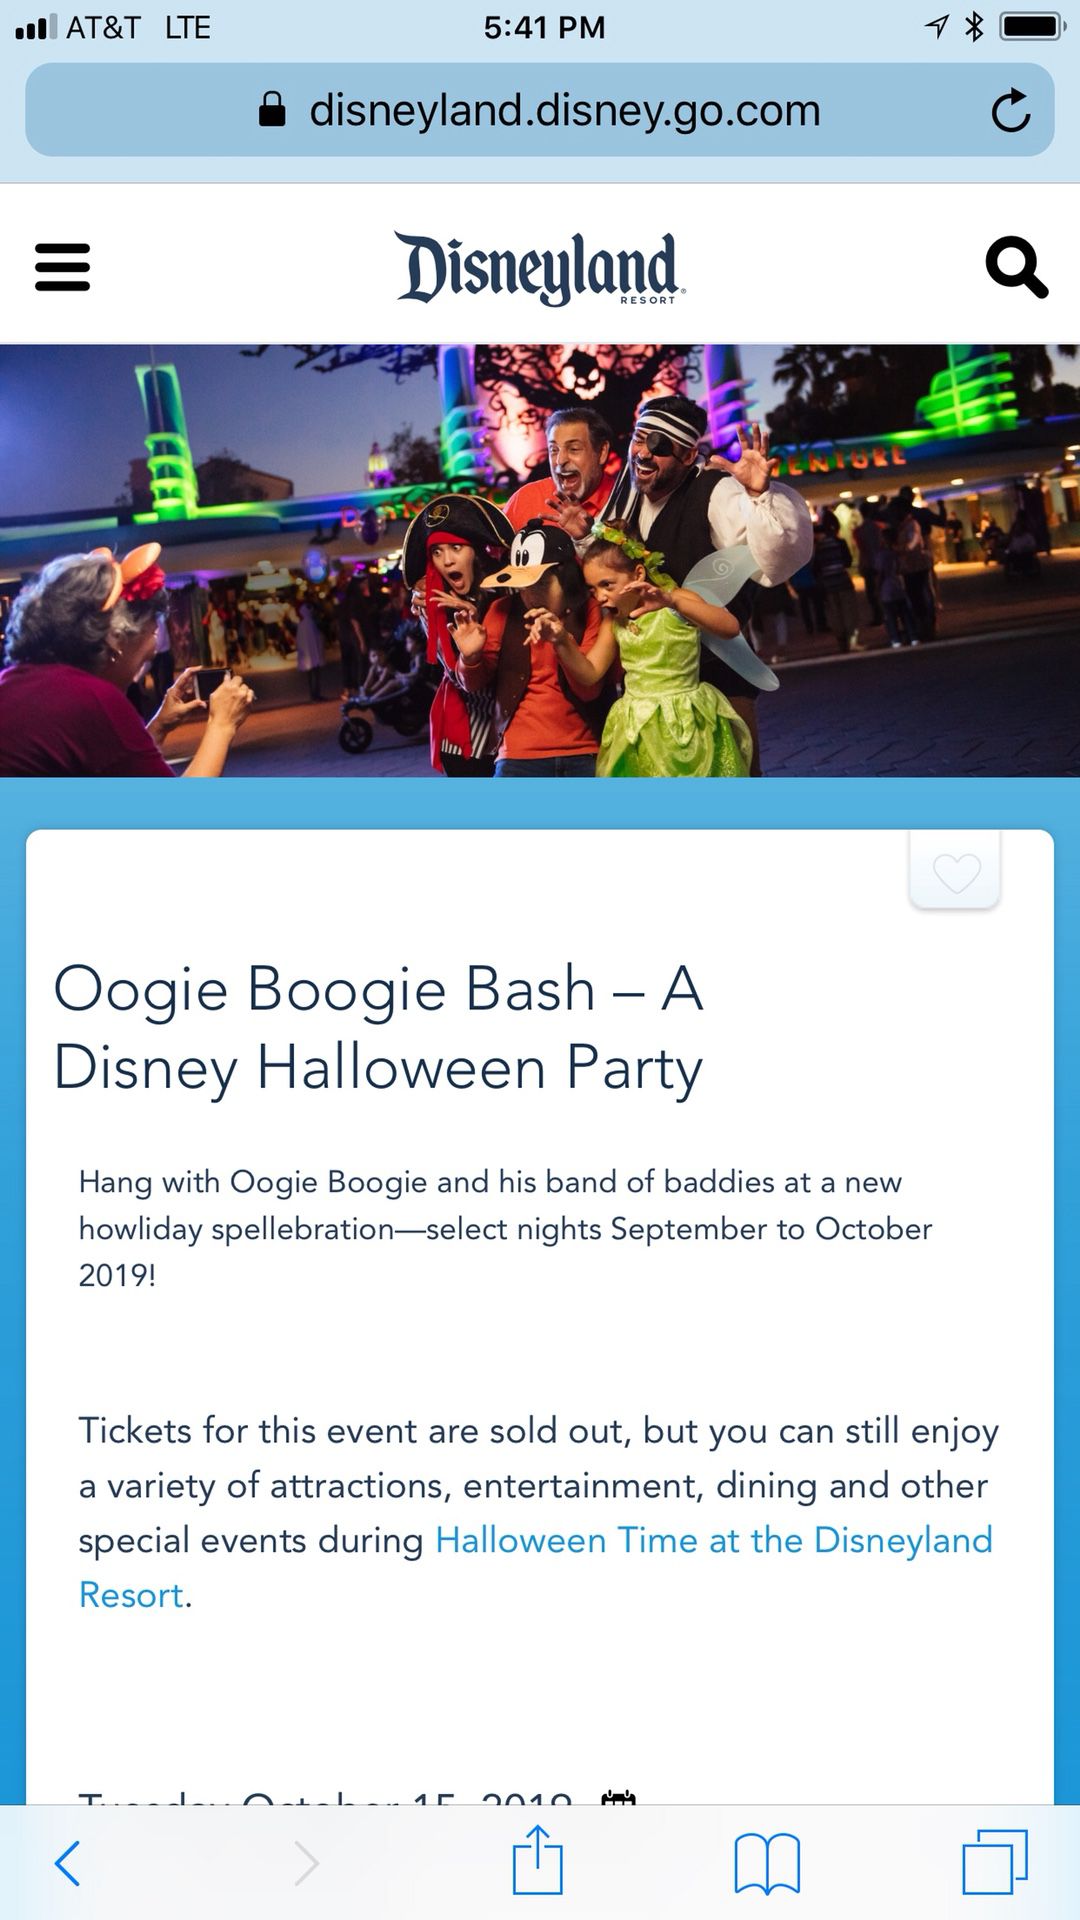 Disney oogie boogie bash Halloween party